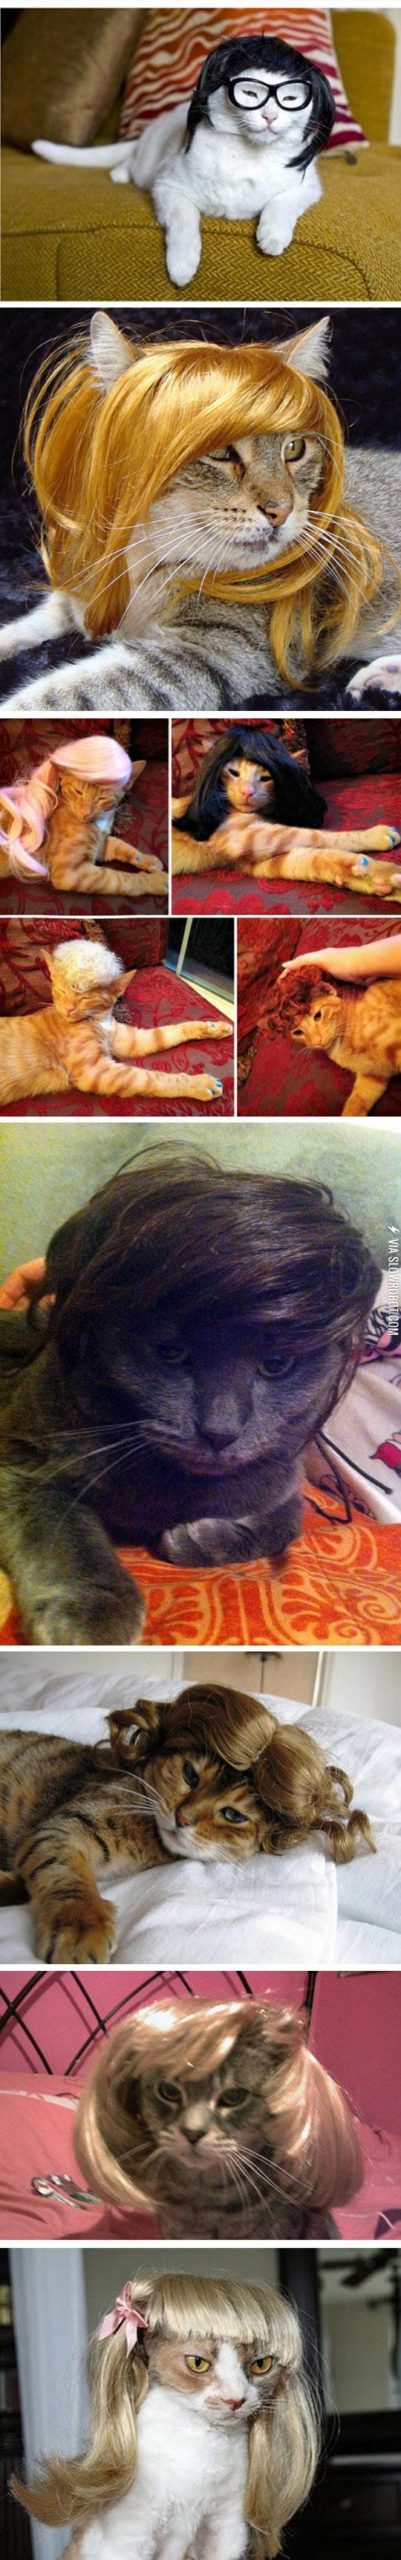 Cats+wearing+wigs.